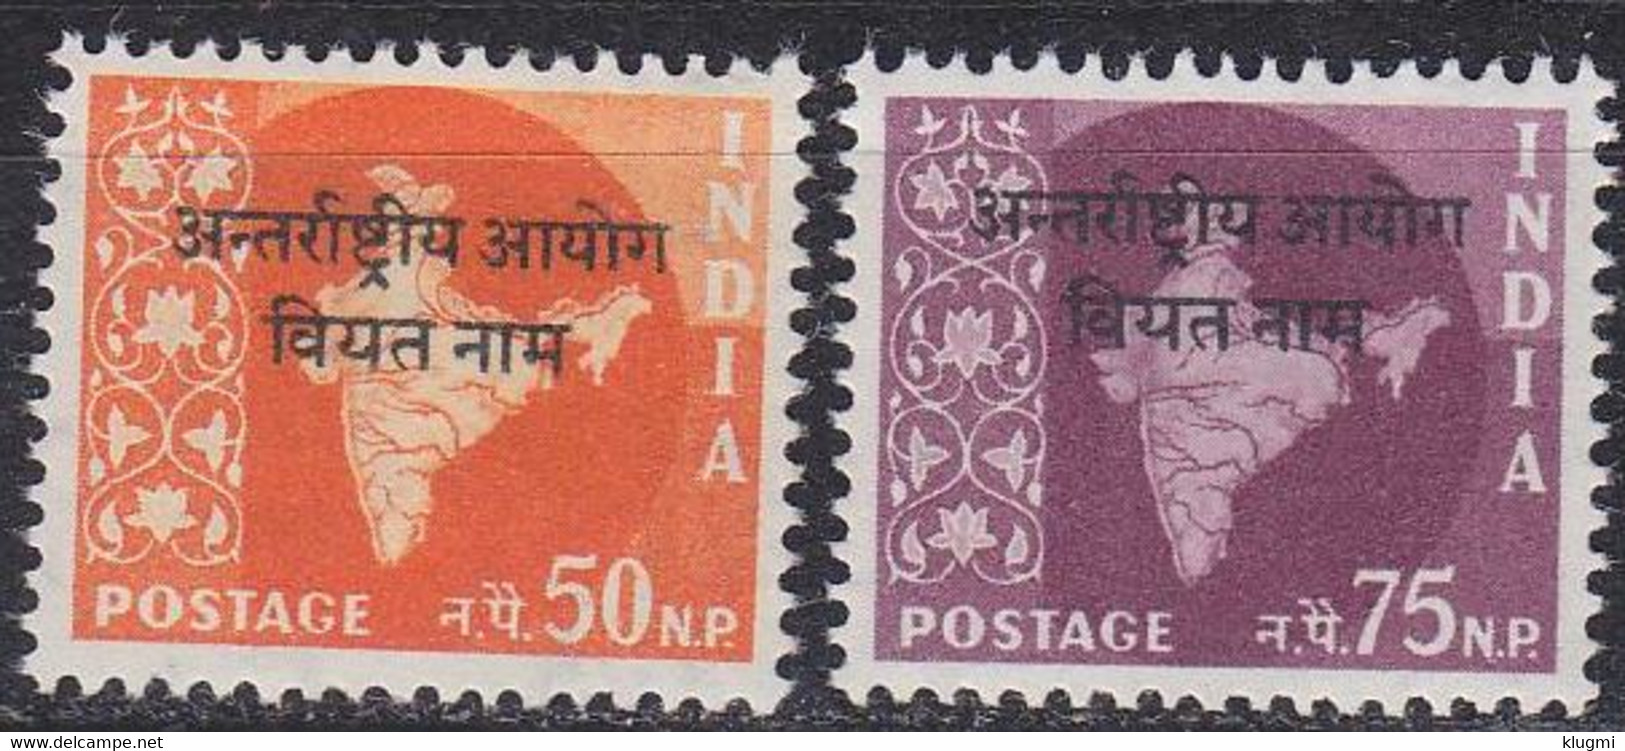 INDIEN INDIA [Vietnam] MiNr 0006 Ex ( **/mnh ) [01] - Military Service Stamp